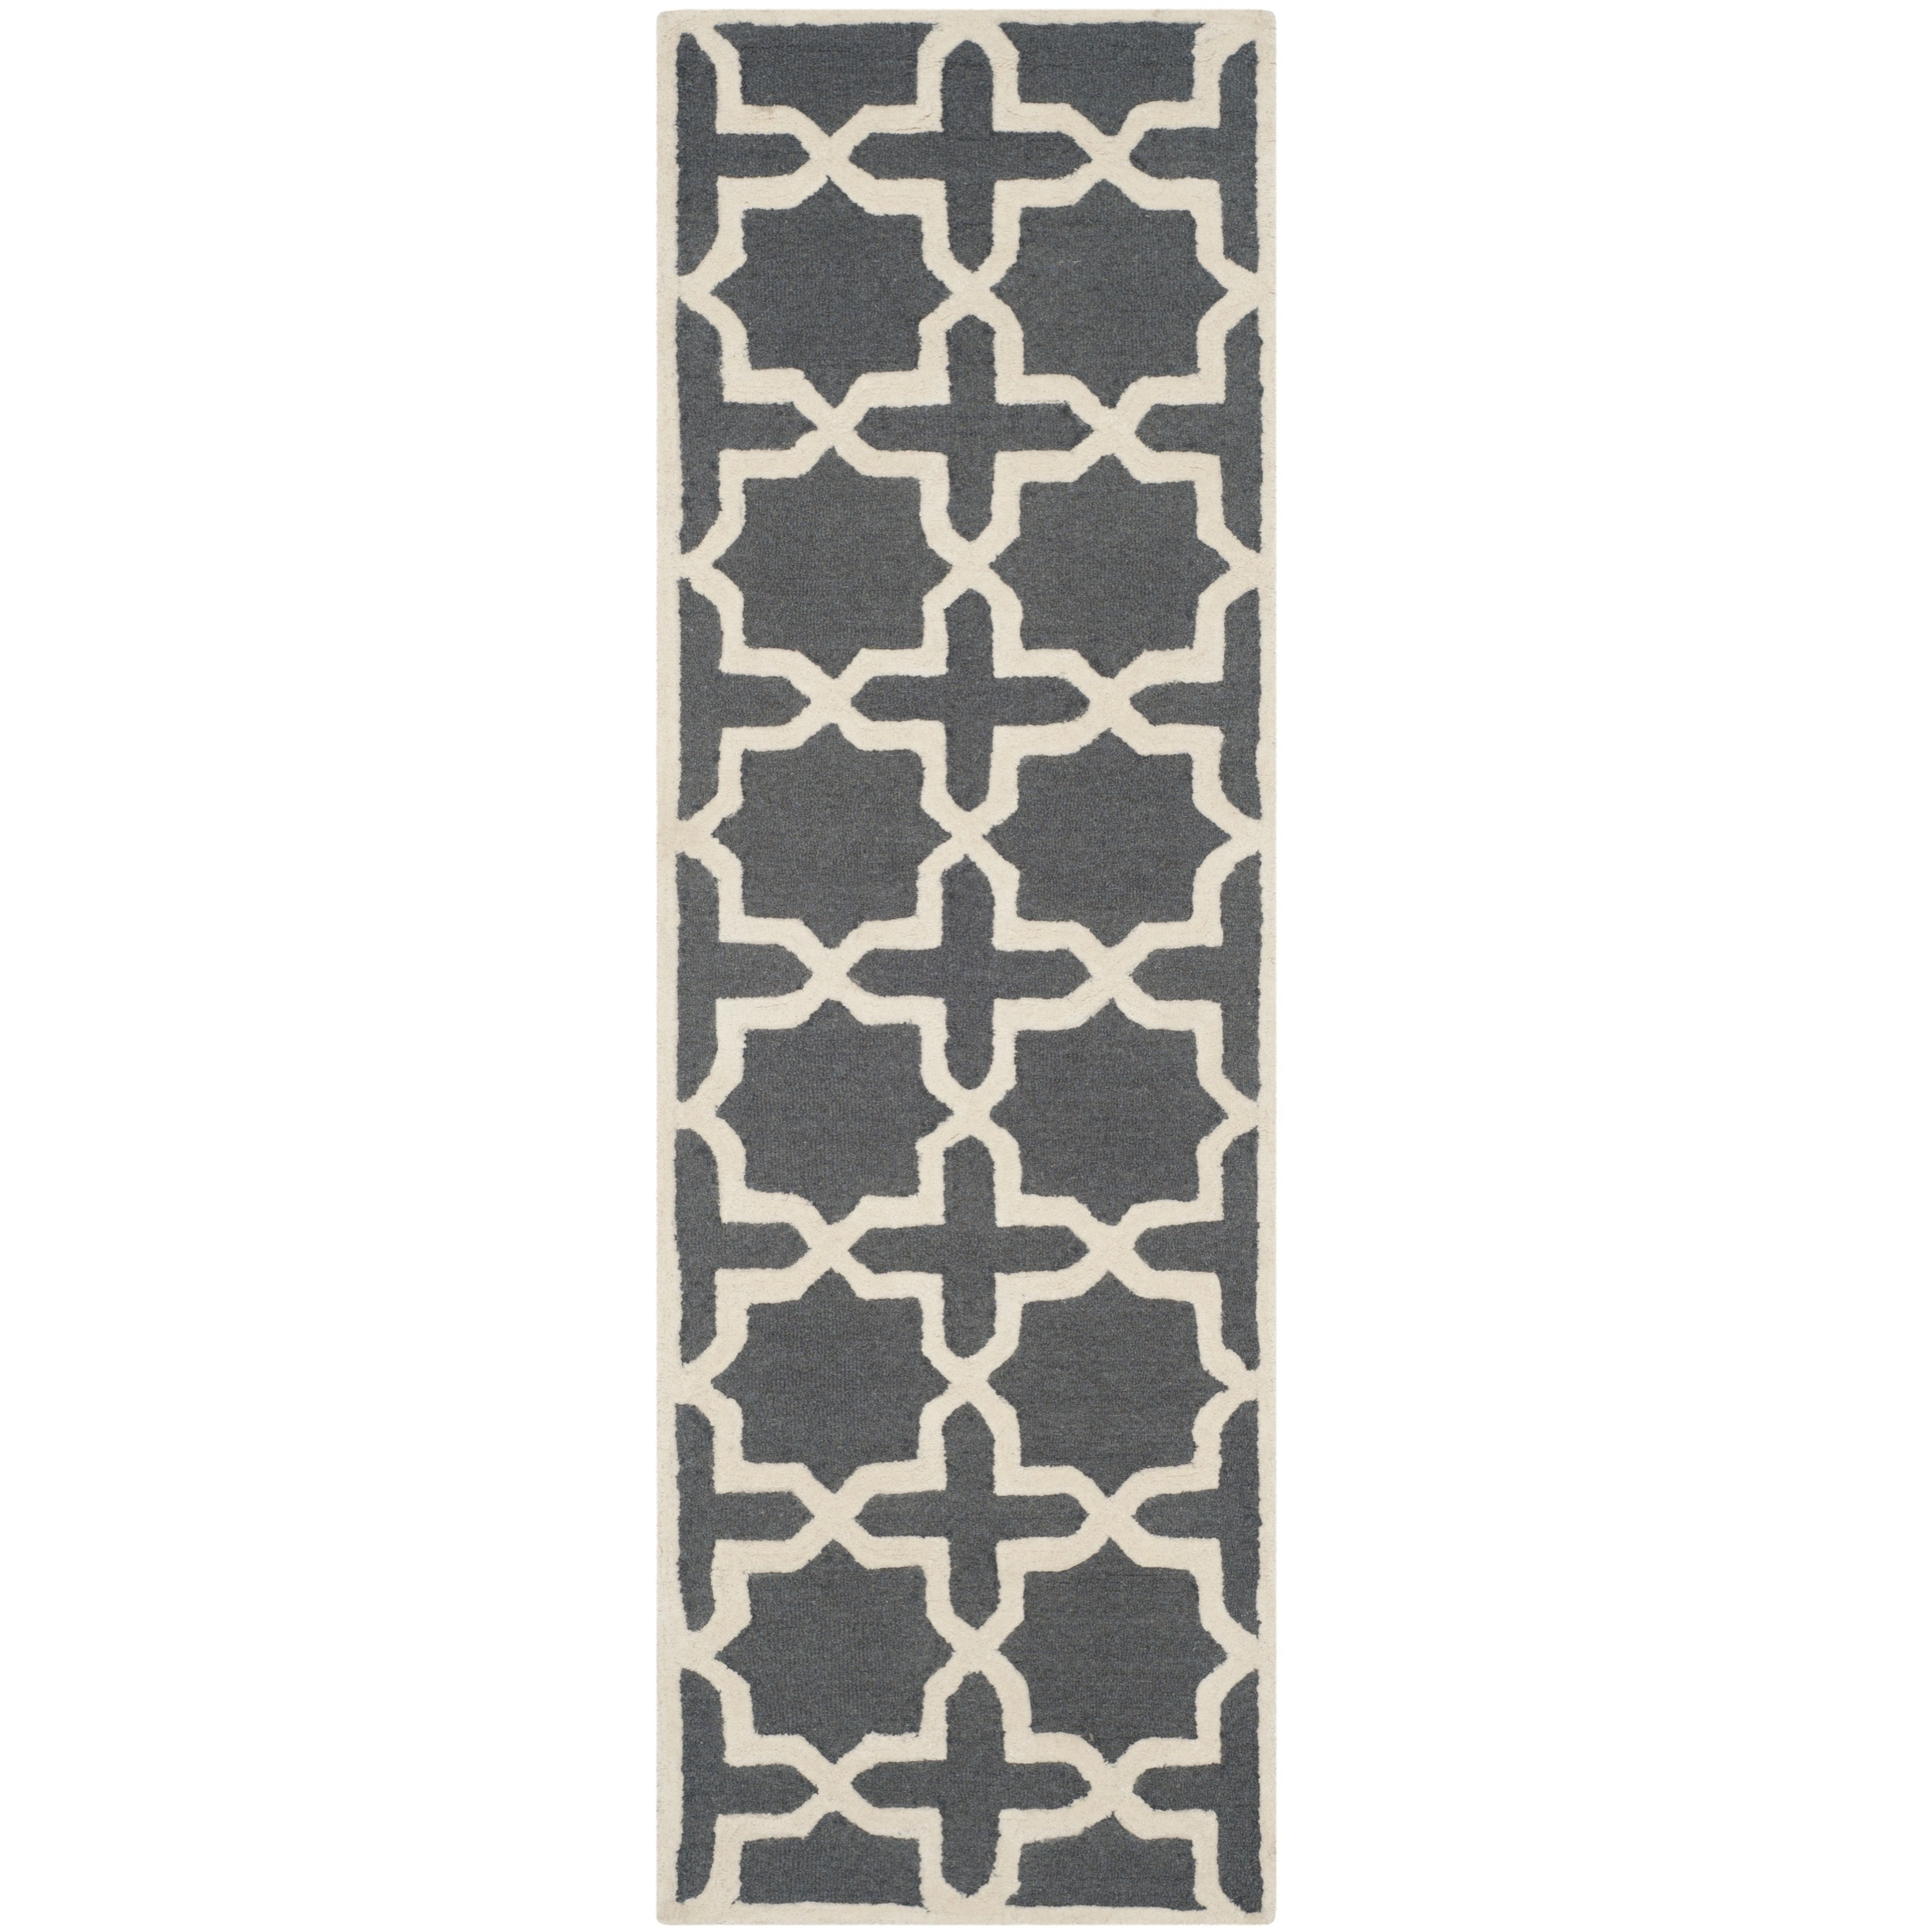 Safavieh Handmade Moroccan Cambridge Dark Grey/ Ivory Wool Rug (26 X 8)